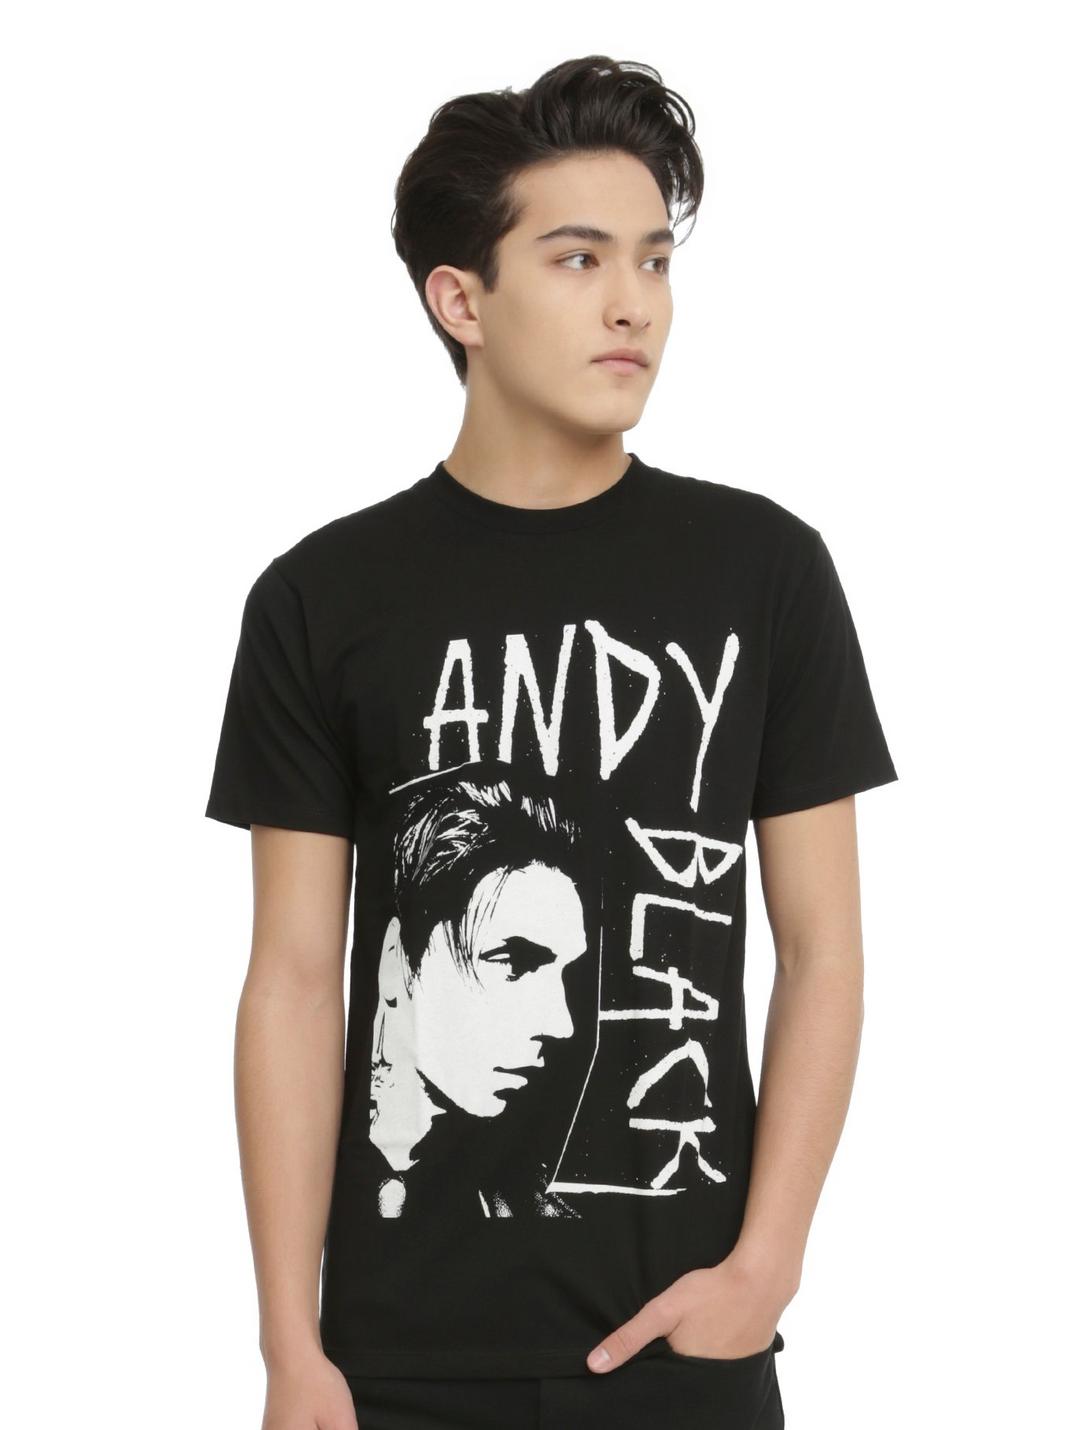 Andy Black Profile T-Shirt, BLACK, hi-res